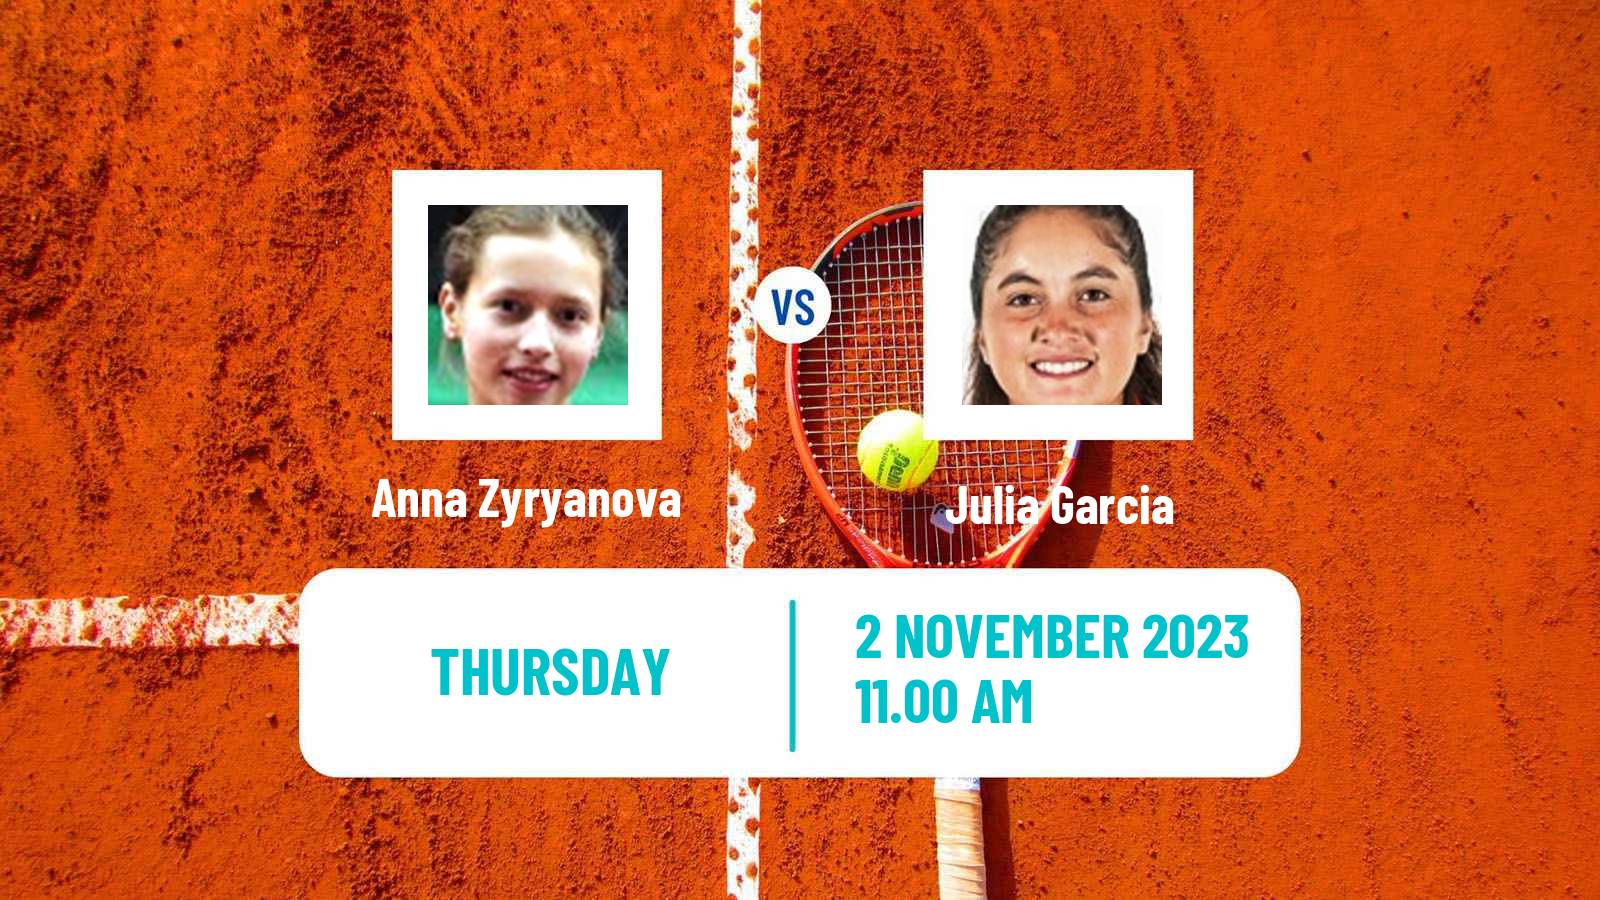 Tennis ITF W15 Norman Ok Women Anna Zyryanova - Julia Garcia